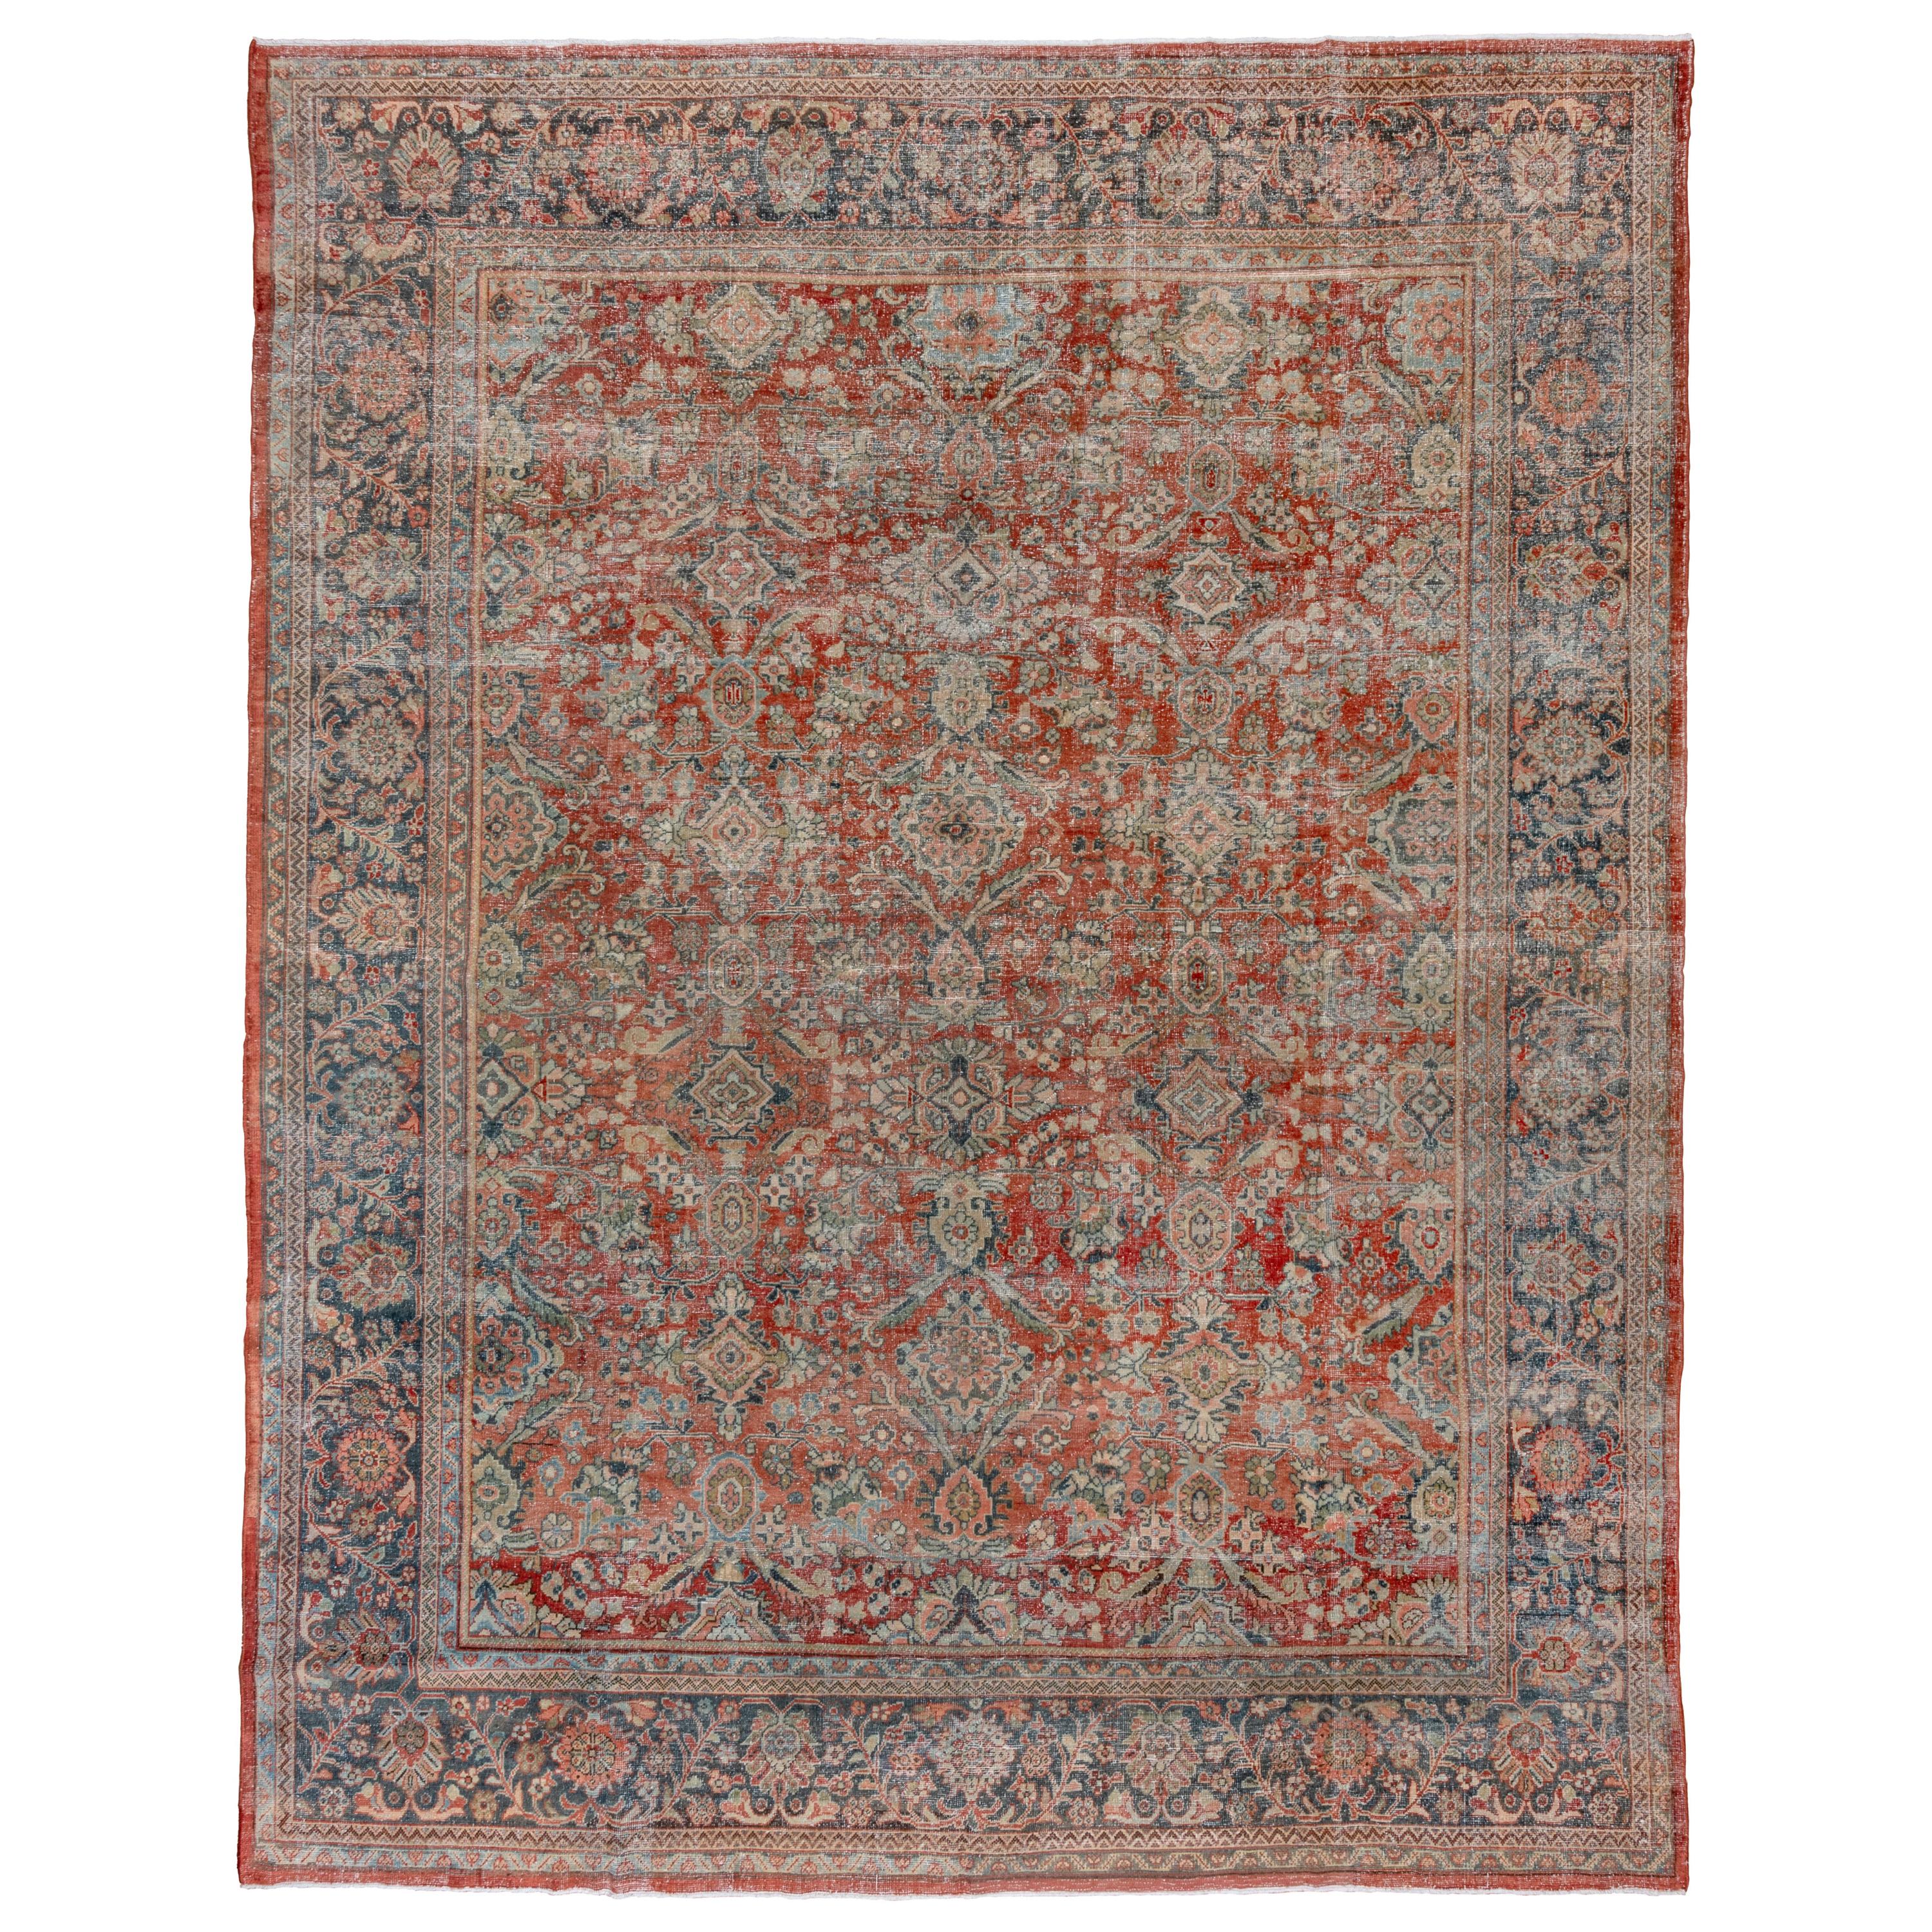 Leichter antiker persischer Mahal-Teppich im Used-Stil, rotes All-Over-Feld, Teal-Akzente